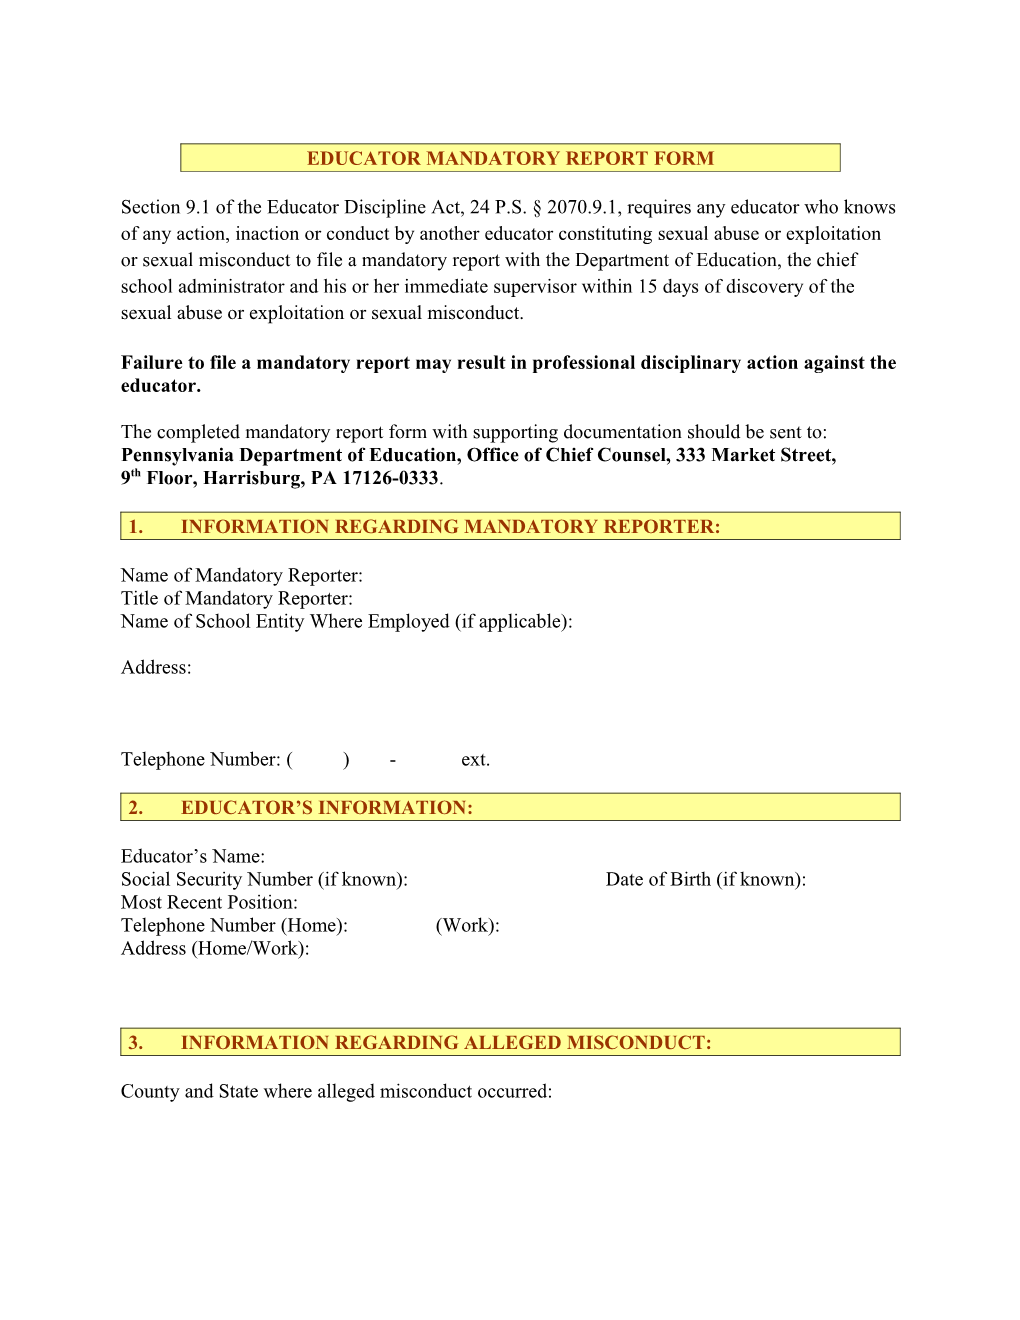 Mandatory Report Form 24PS 2070-9A